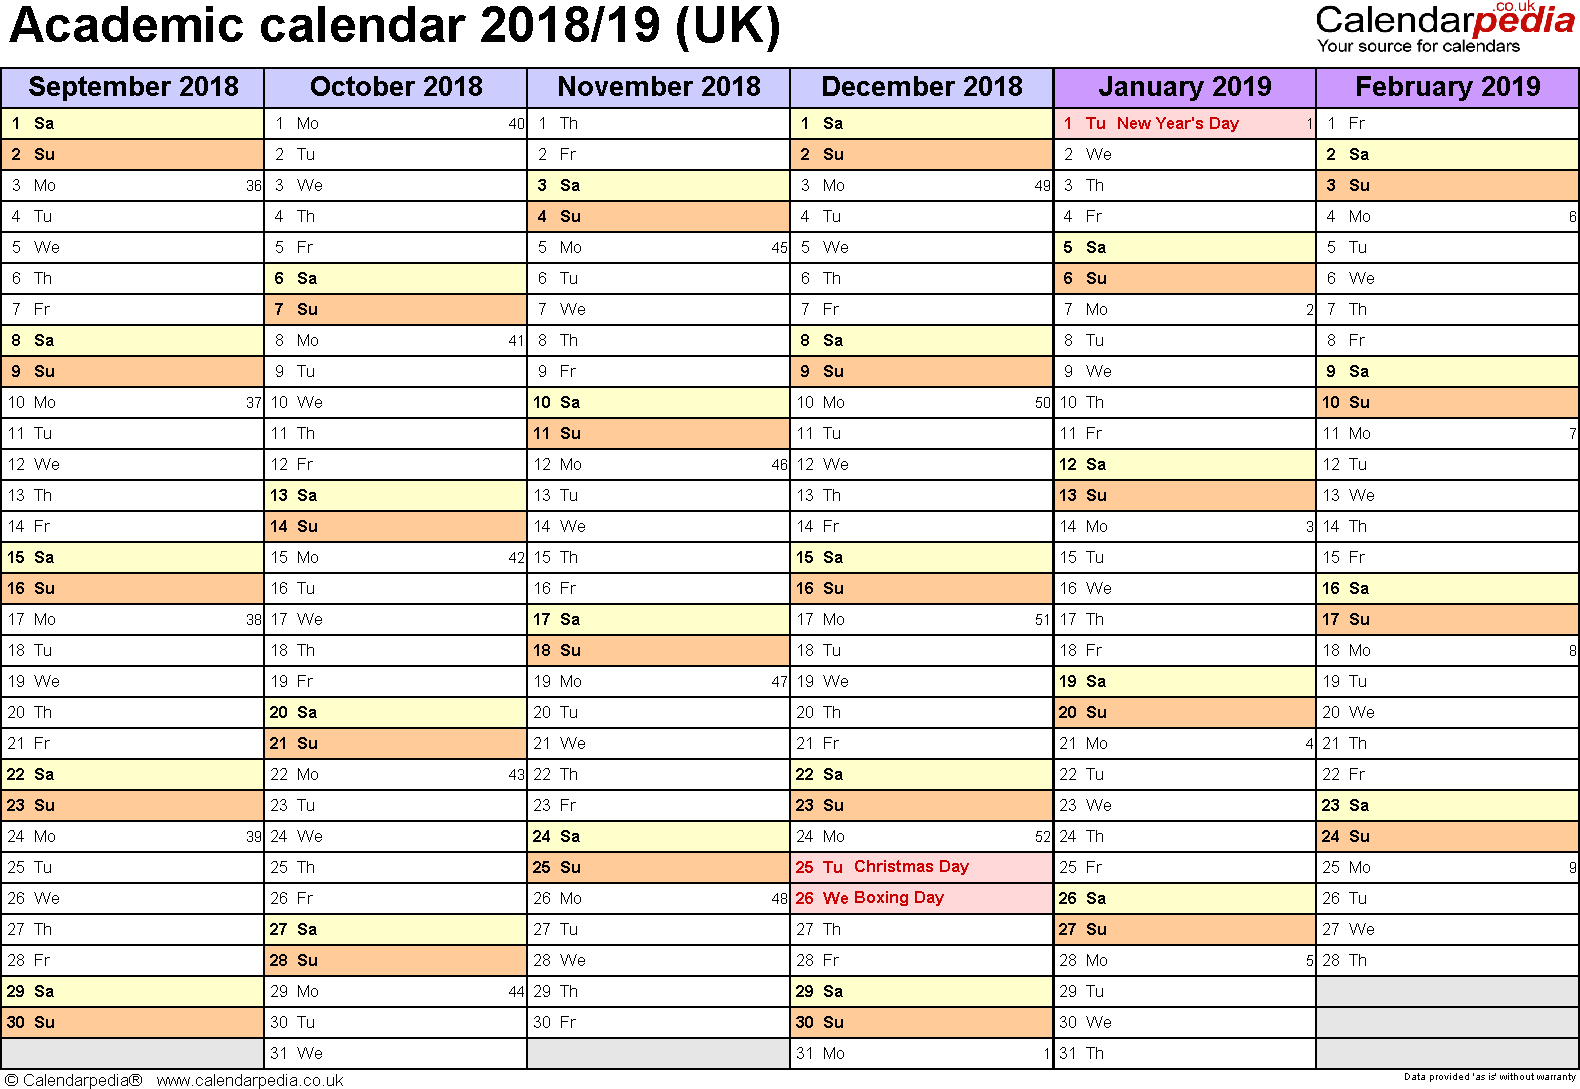 Academic Calendar 2018-19 Template from legaldbol.com